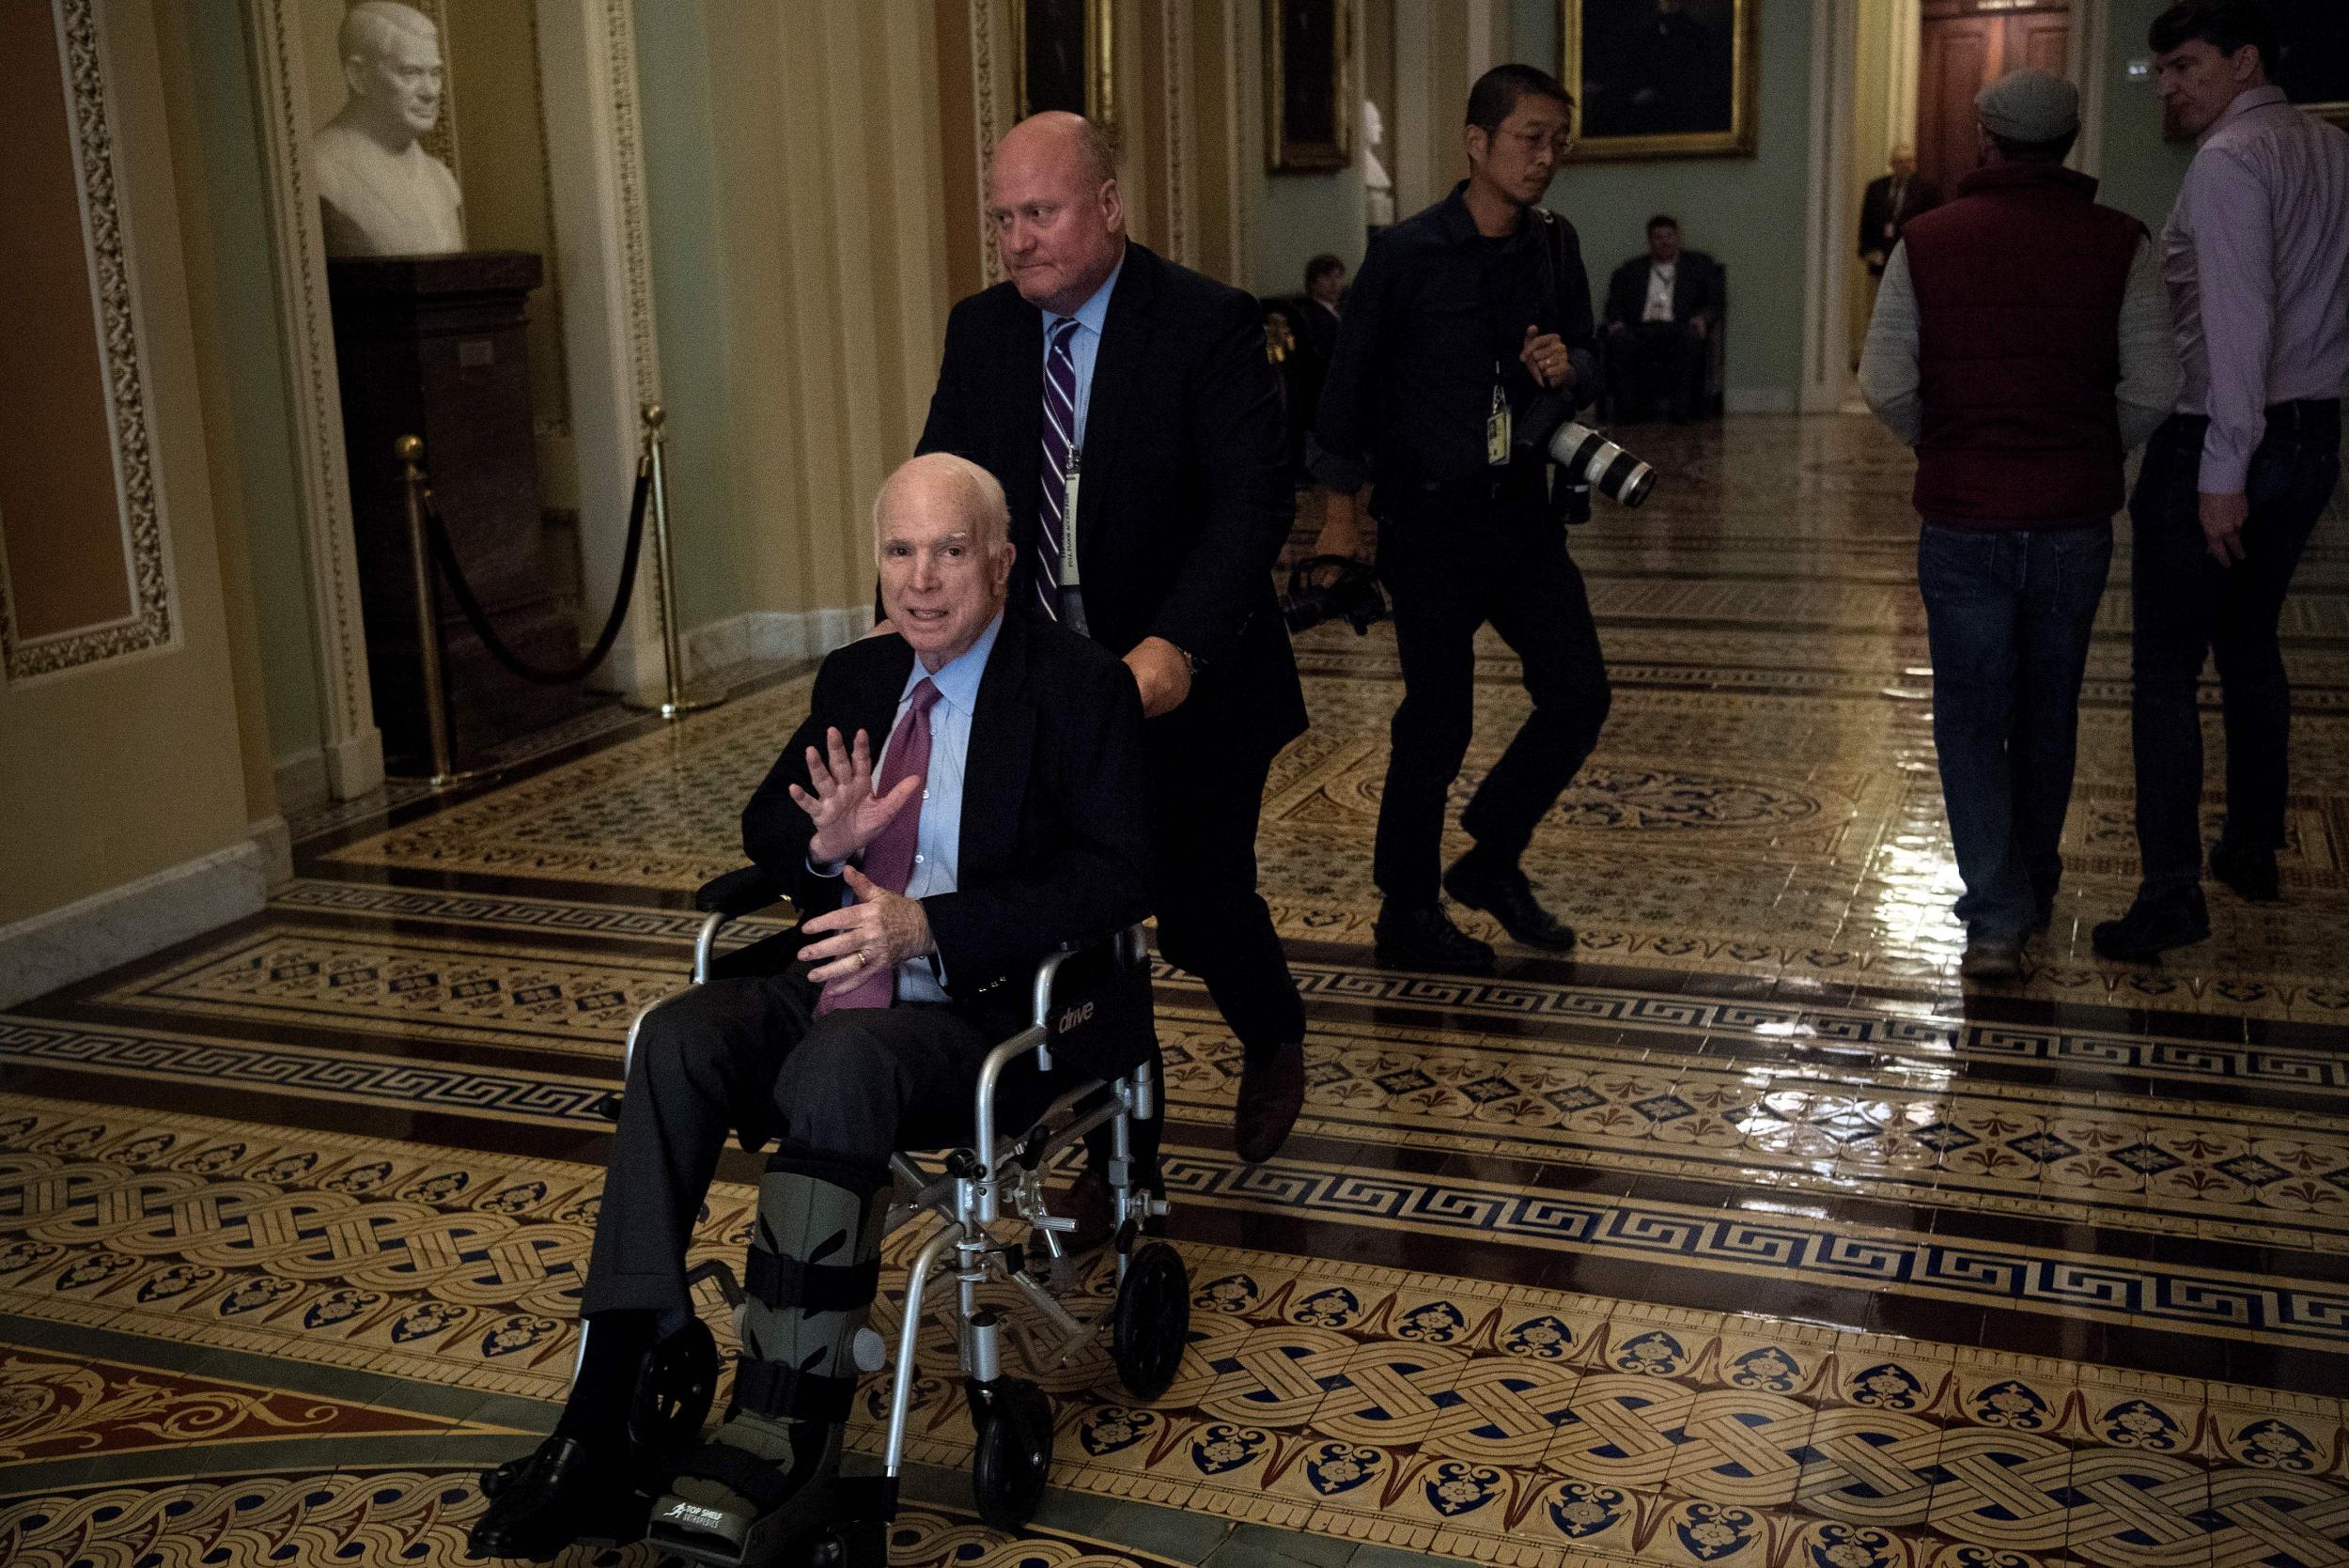 Senator John McCain uses a wheelchair on Capitol Hill